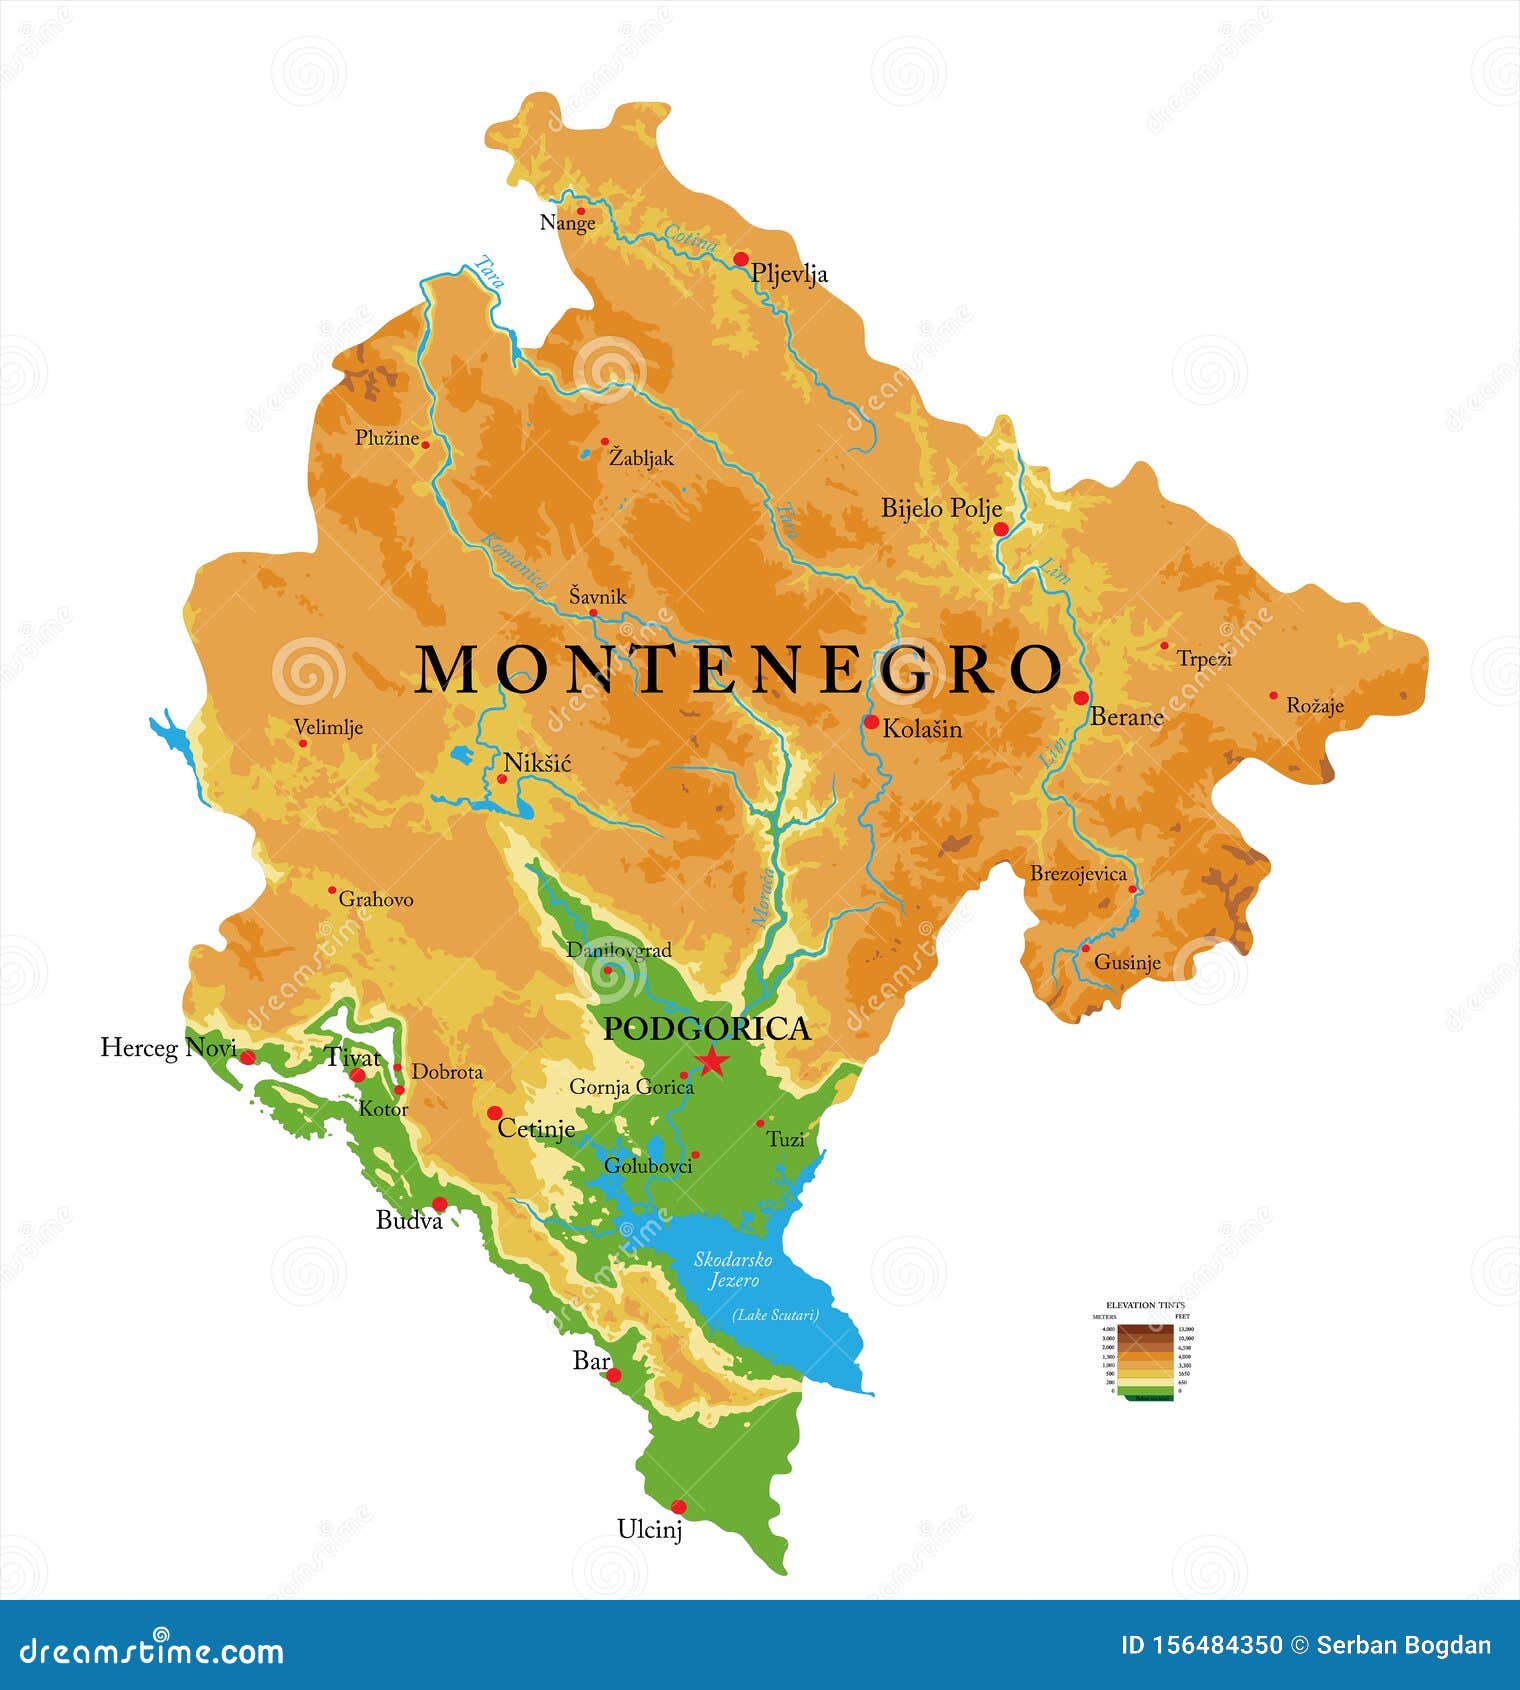 montenegro physical map